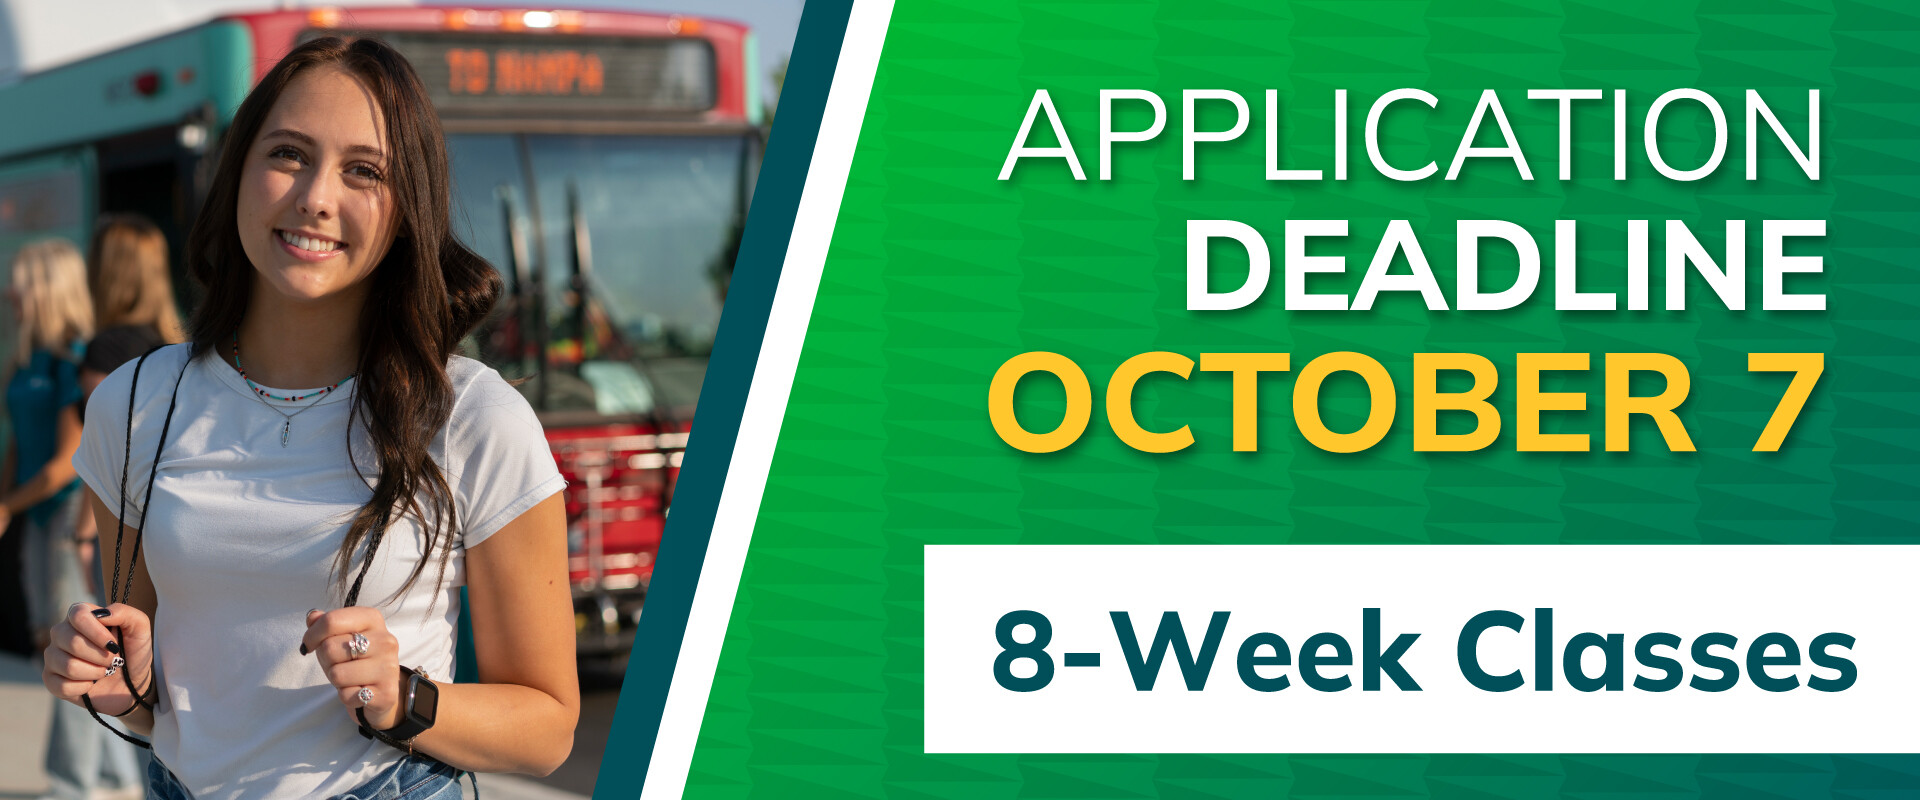 8-Week Classes, Application Deadline October 7